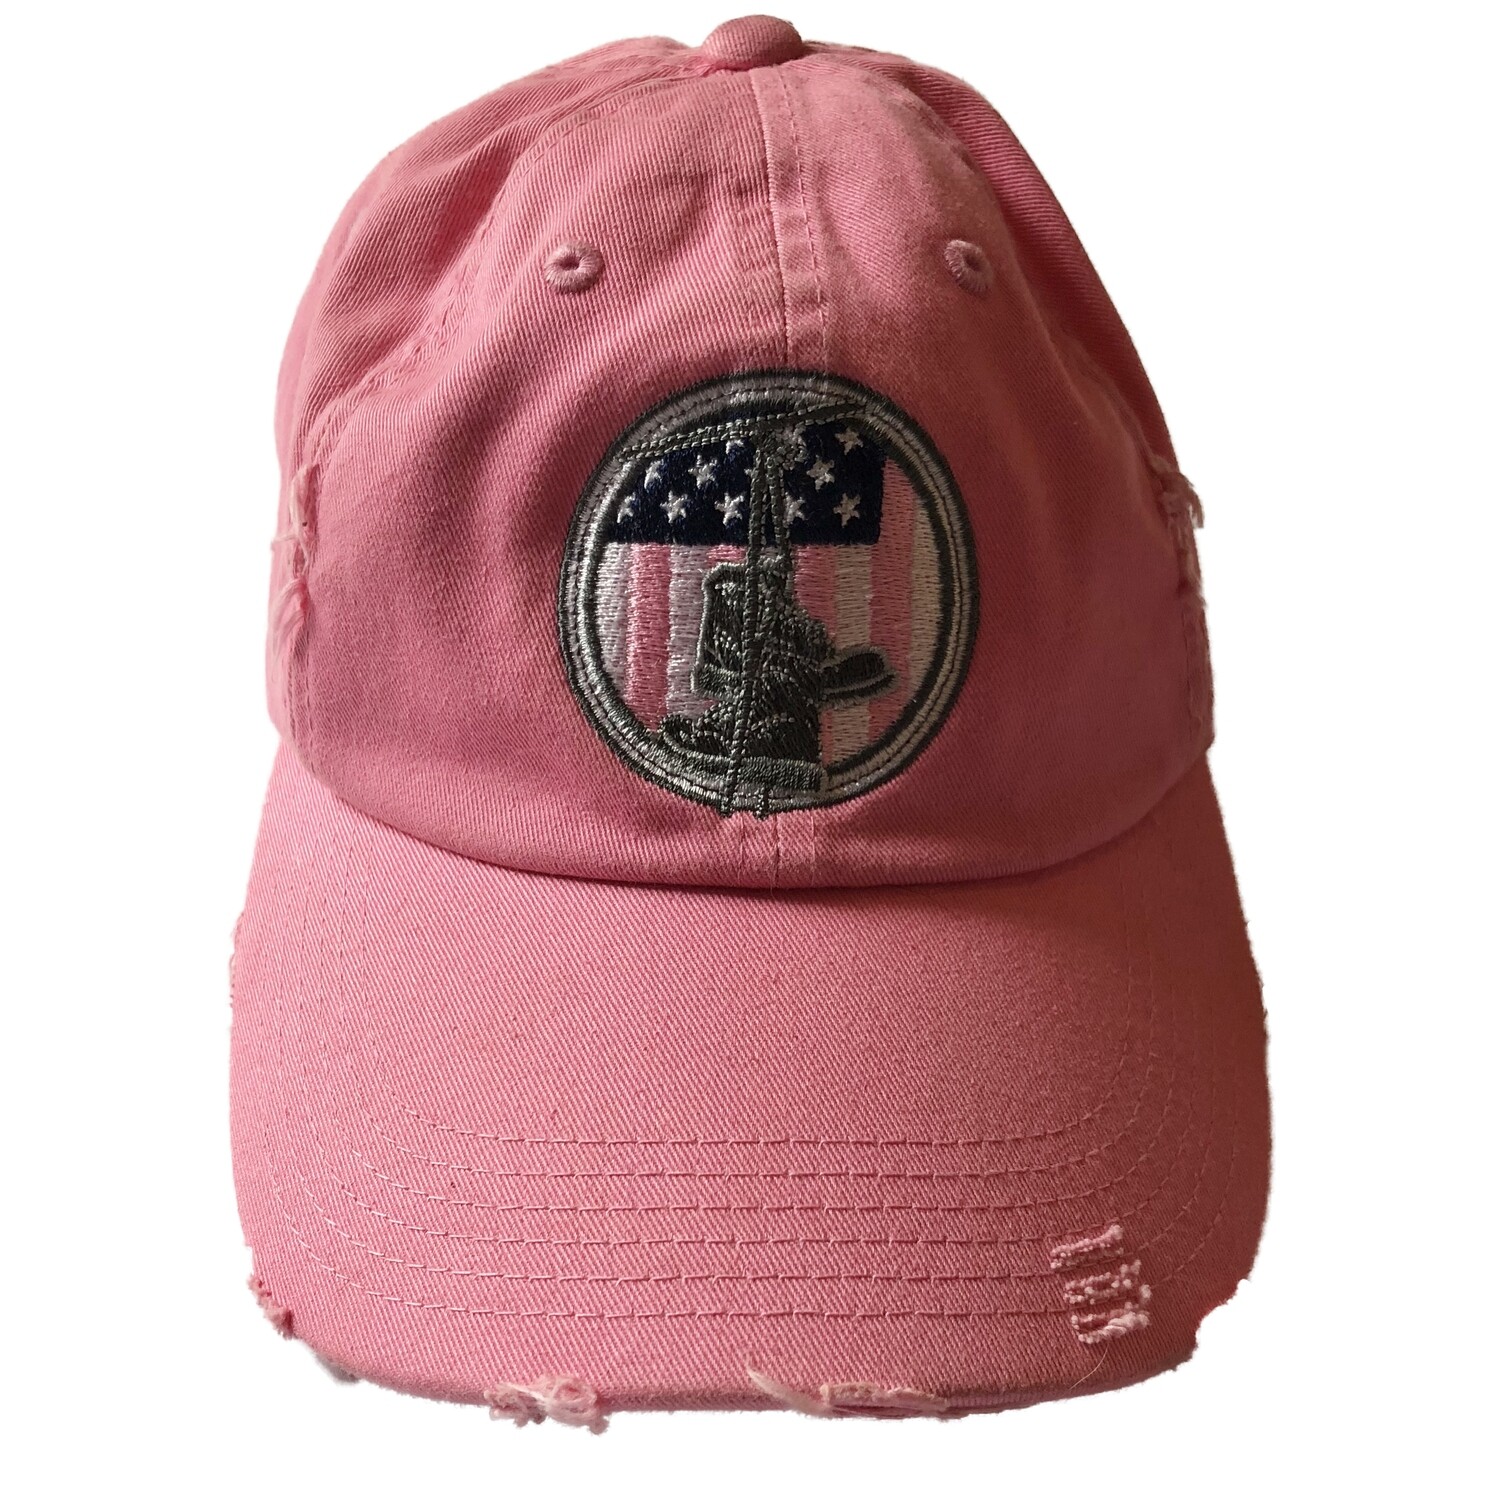 The Heroes Journey Women's Hat - Pink